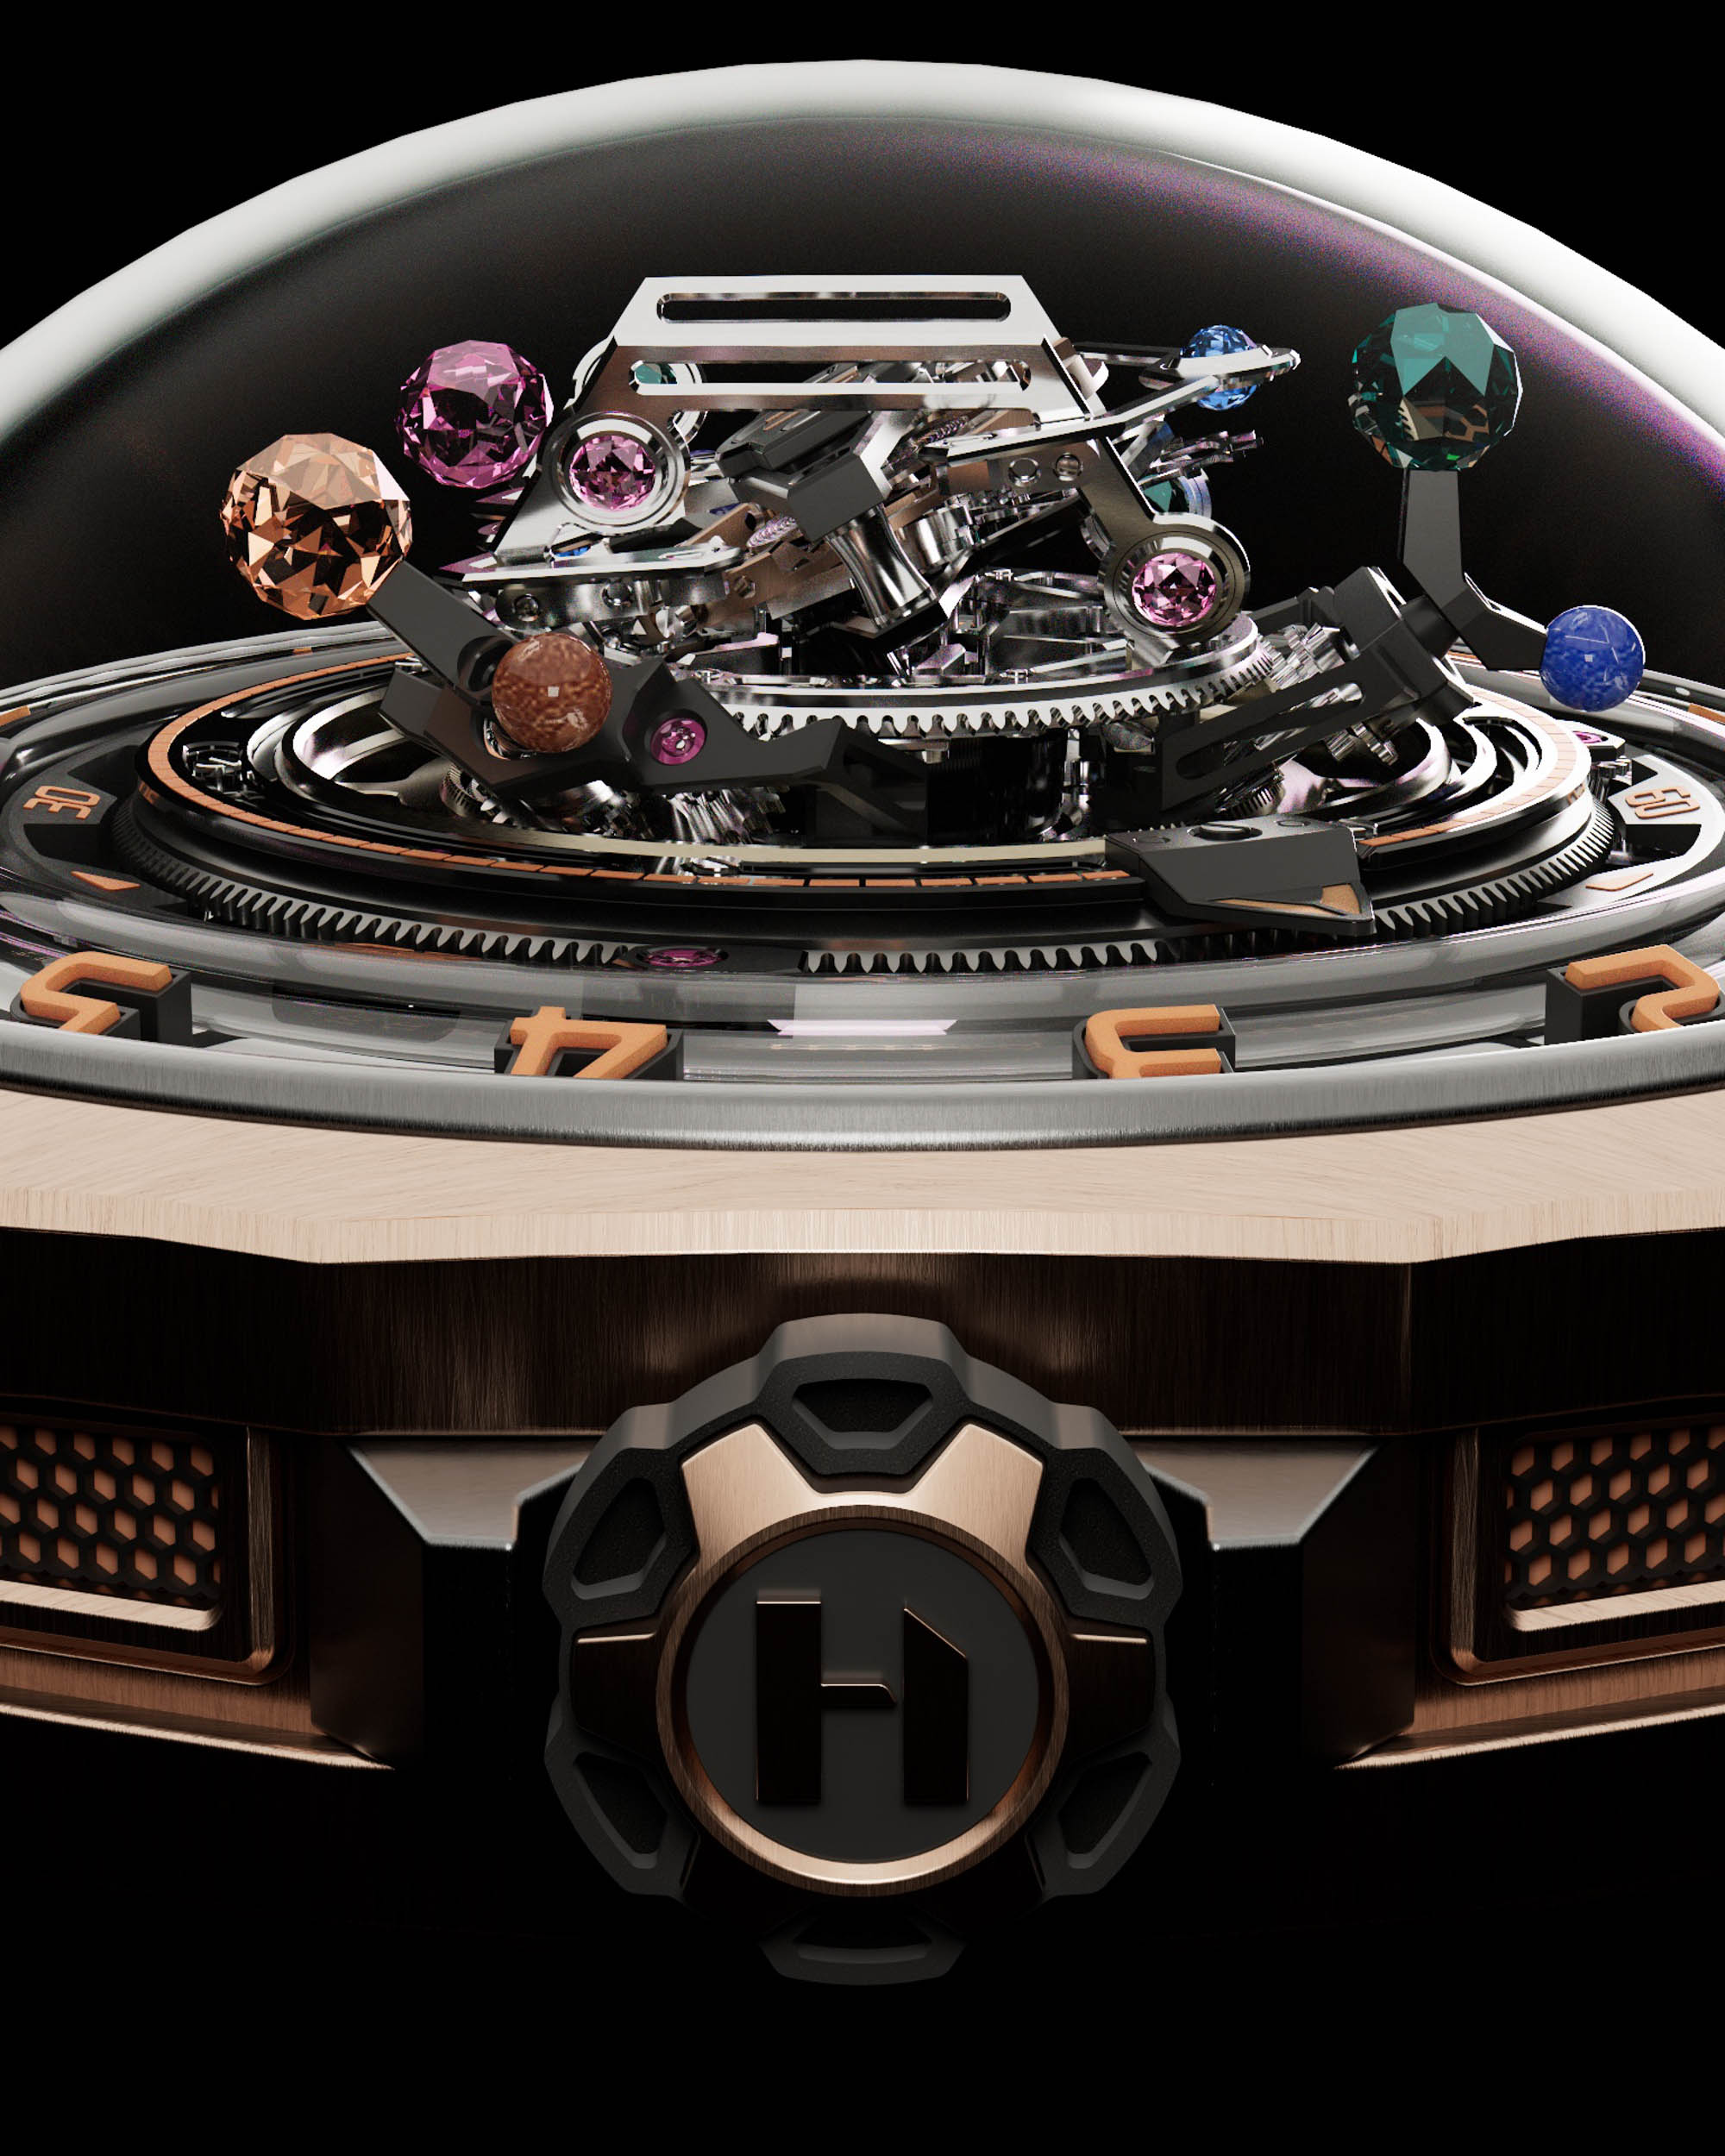 Новый выпуск: Часы HYT Conical Tourbillon Infinity Sapphire